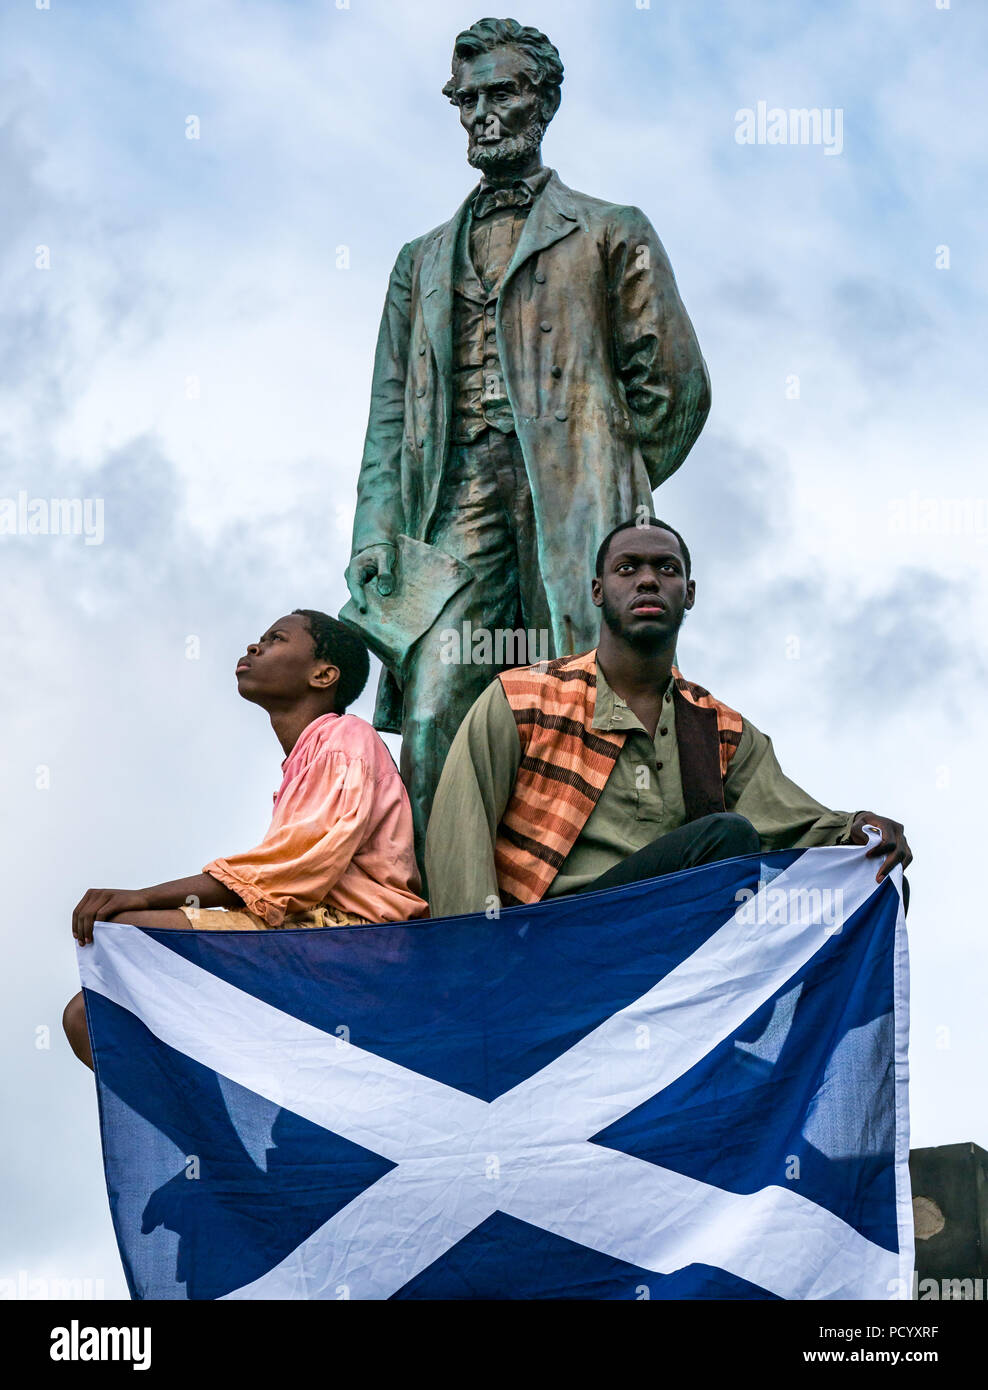 Actores negros americanos & saltire Henry Brown Caja Musical, Fringe, Abraham Lincoln Memorial, Antiguo Cementerio Calton, Edimburgo, Escocia, Reino Unido Foto de stock